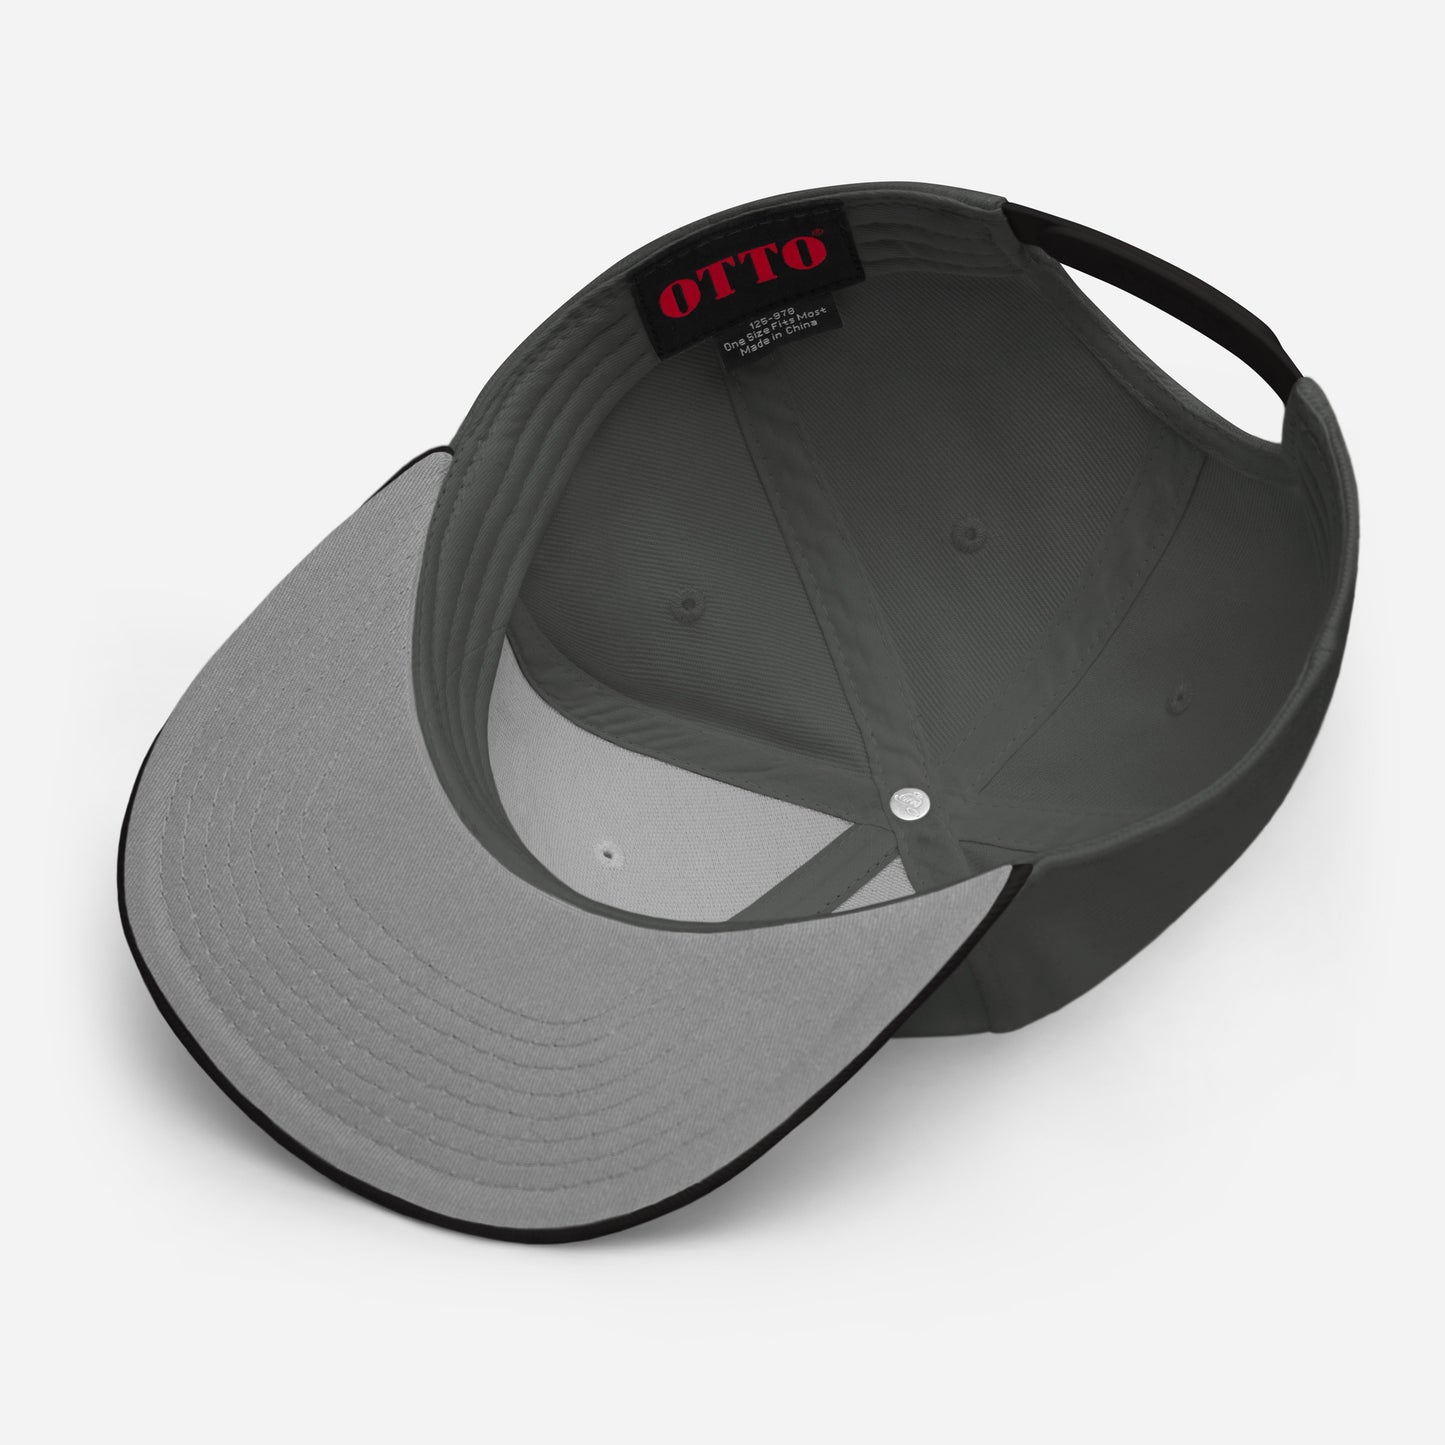 "₿asketball" Charcoal gray/Black Snapback Hat